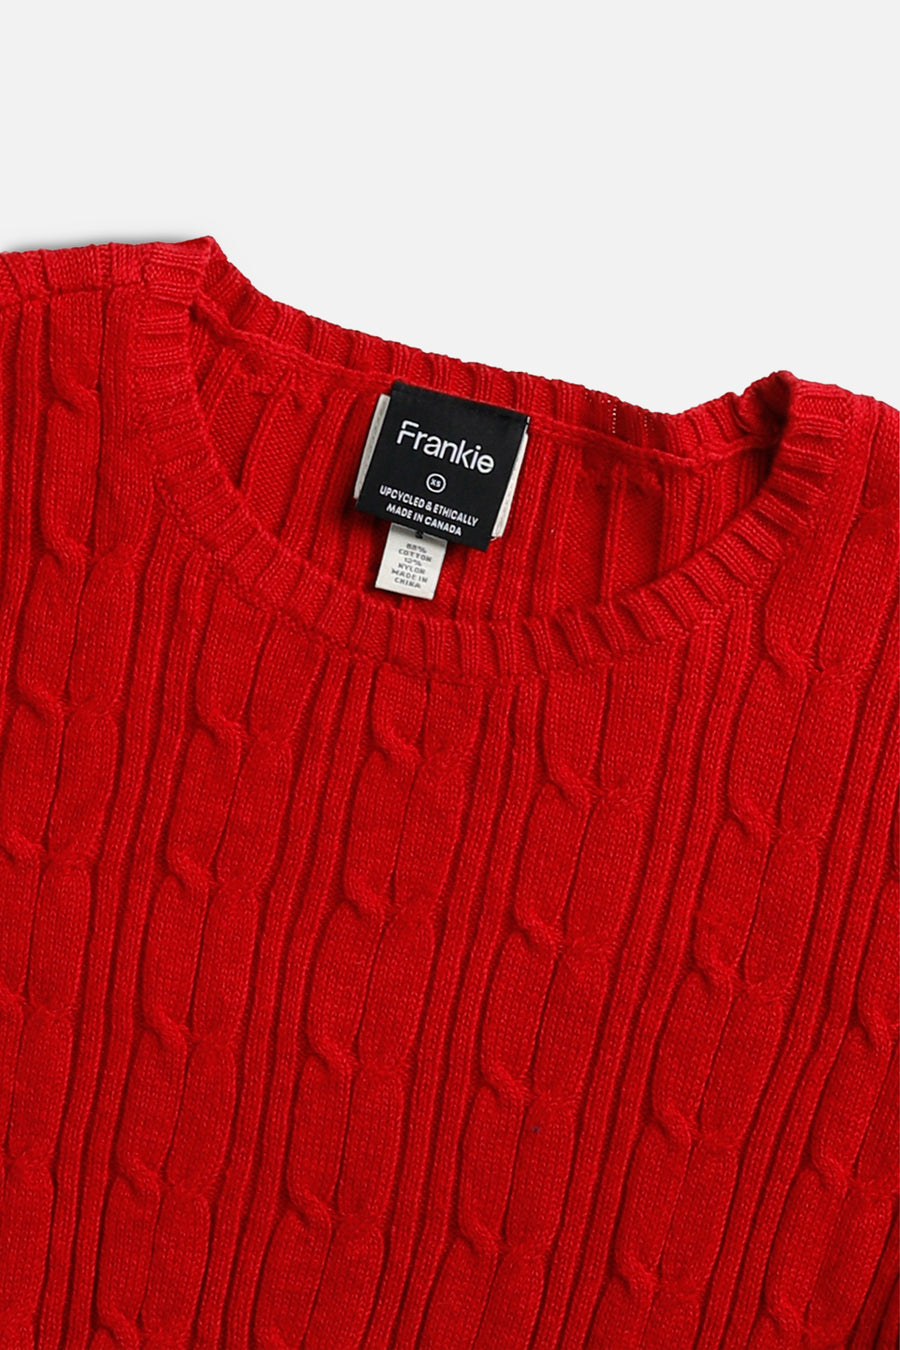 Rework Crop Knit Sweater - XS